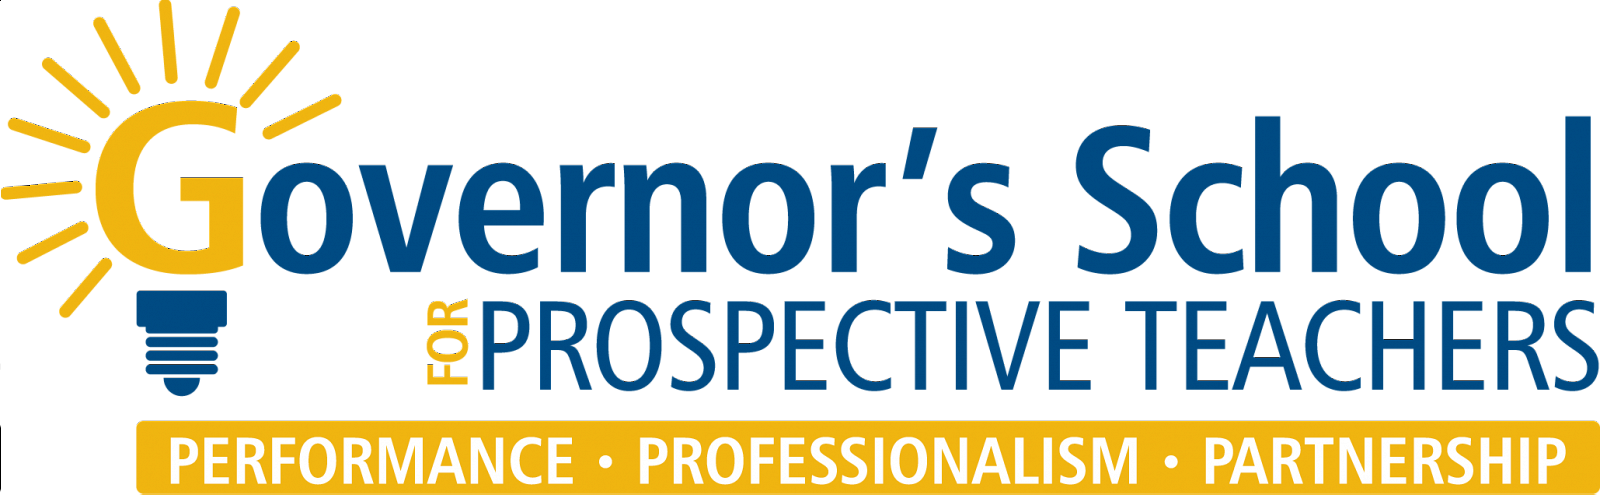 Governor's School for Prospective Teachers Logo Transparent